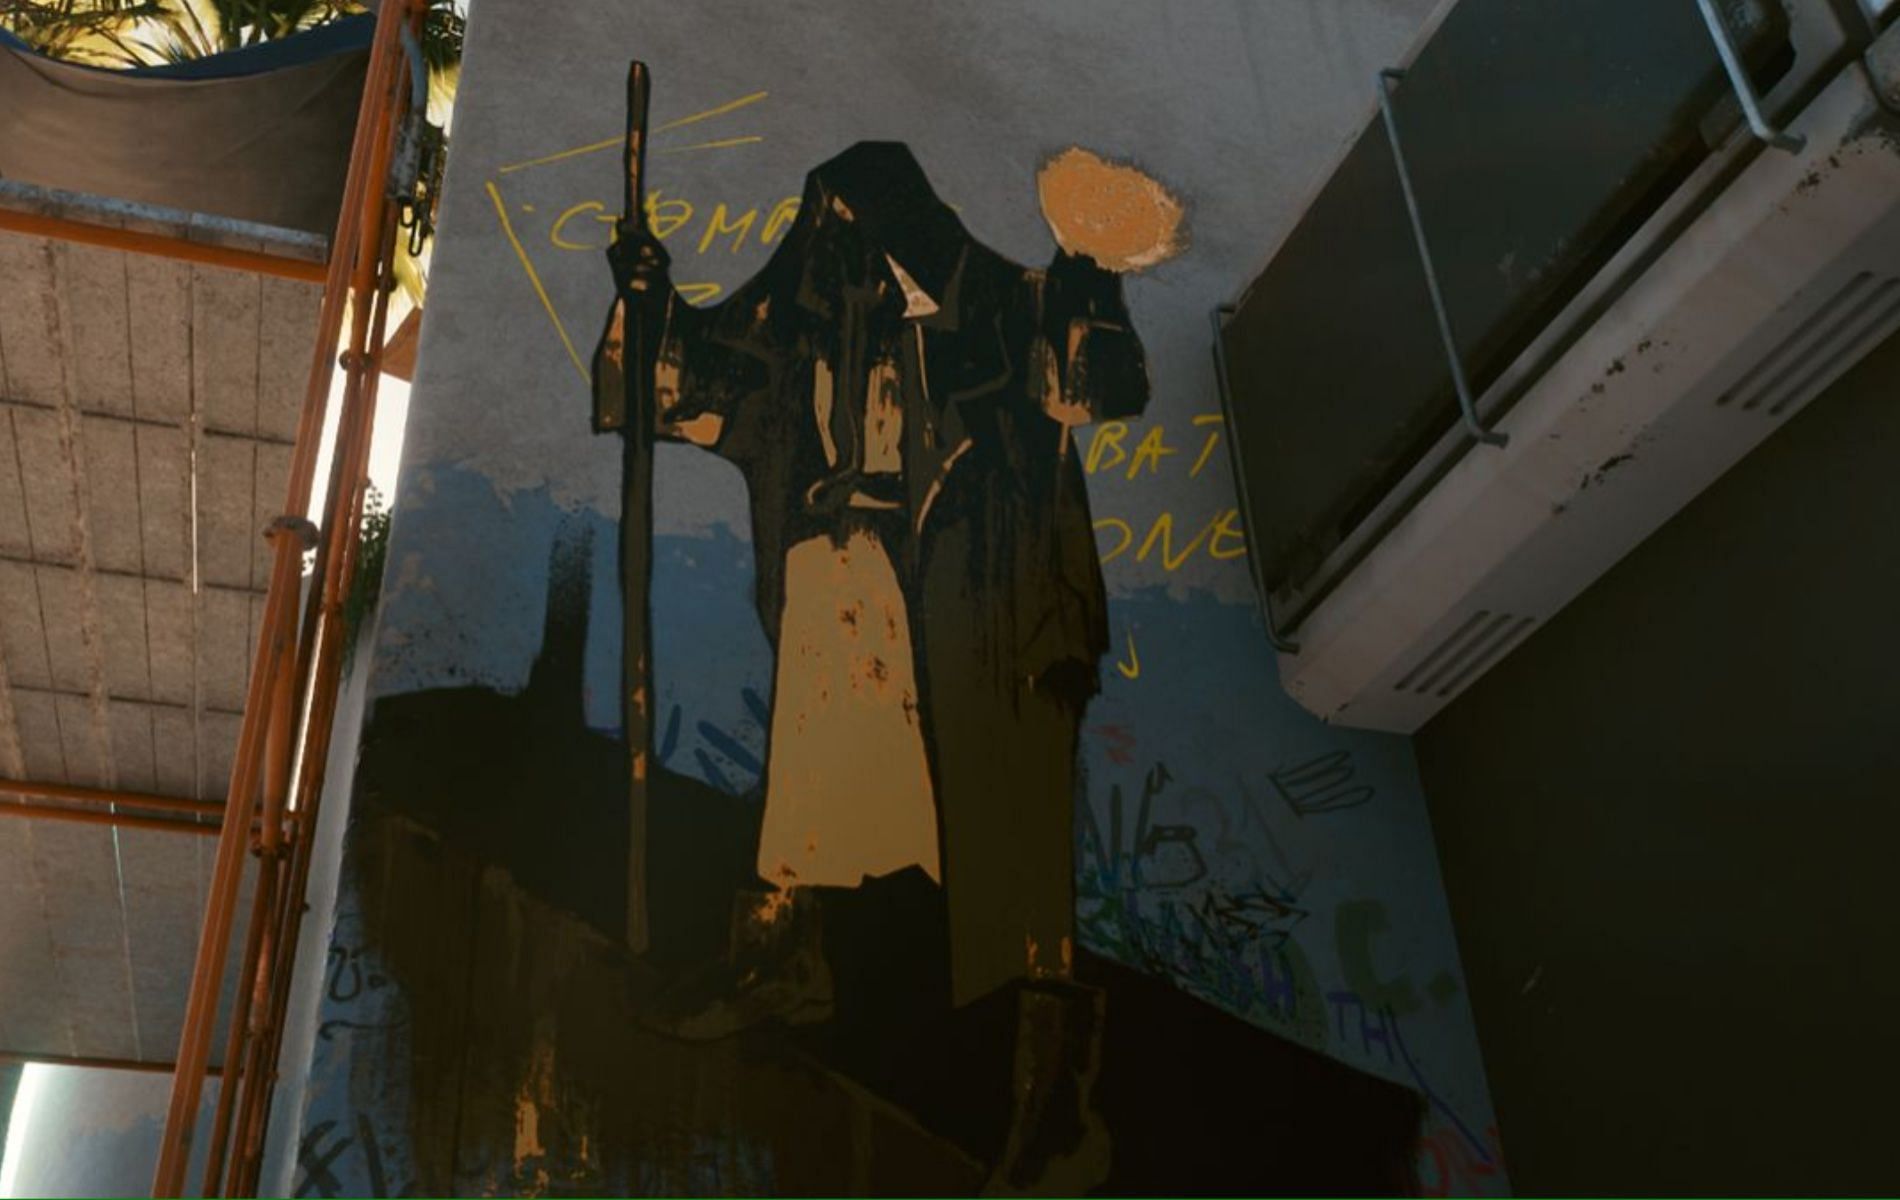 Minor Arcana mural locations in Cyberpunk 2077 Phanom Liberty